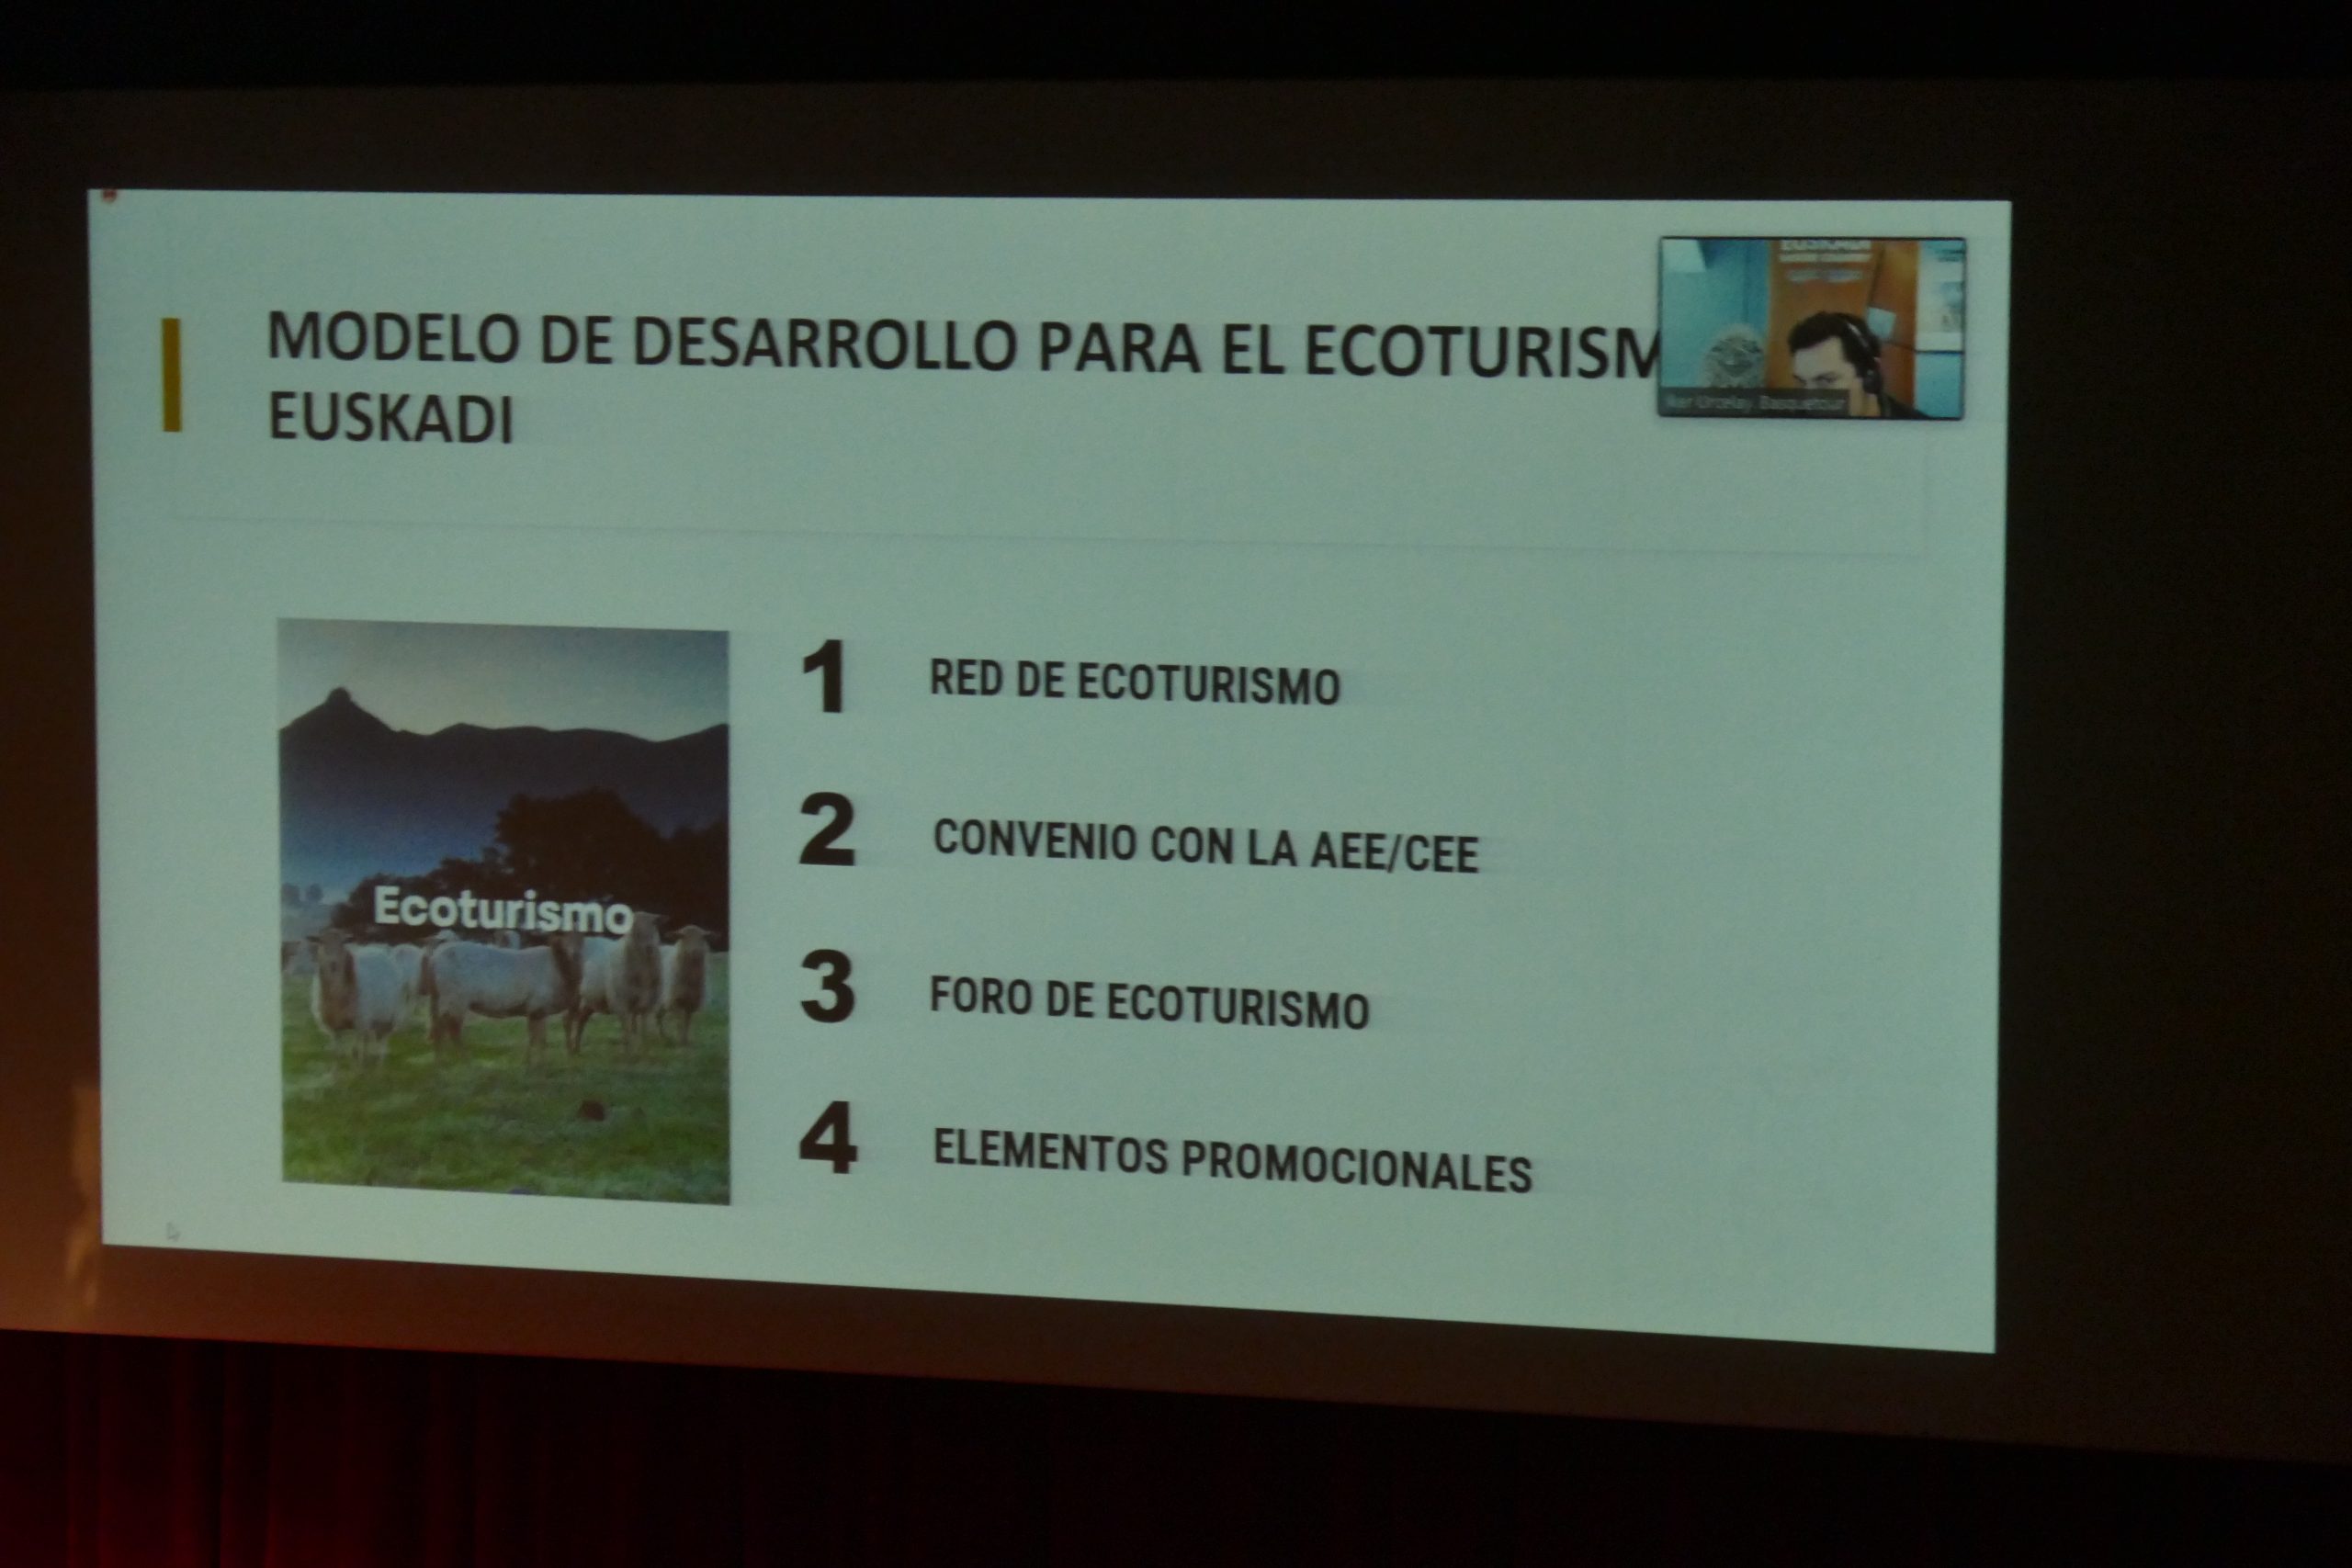 Development model for ecotourism